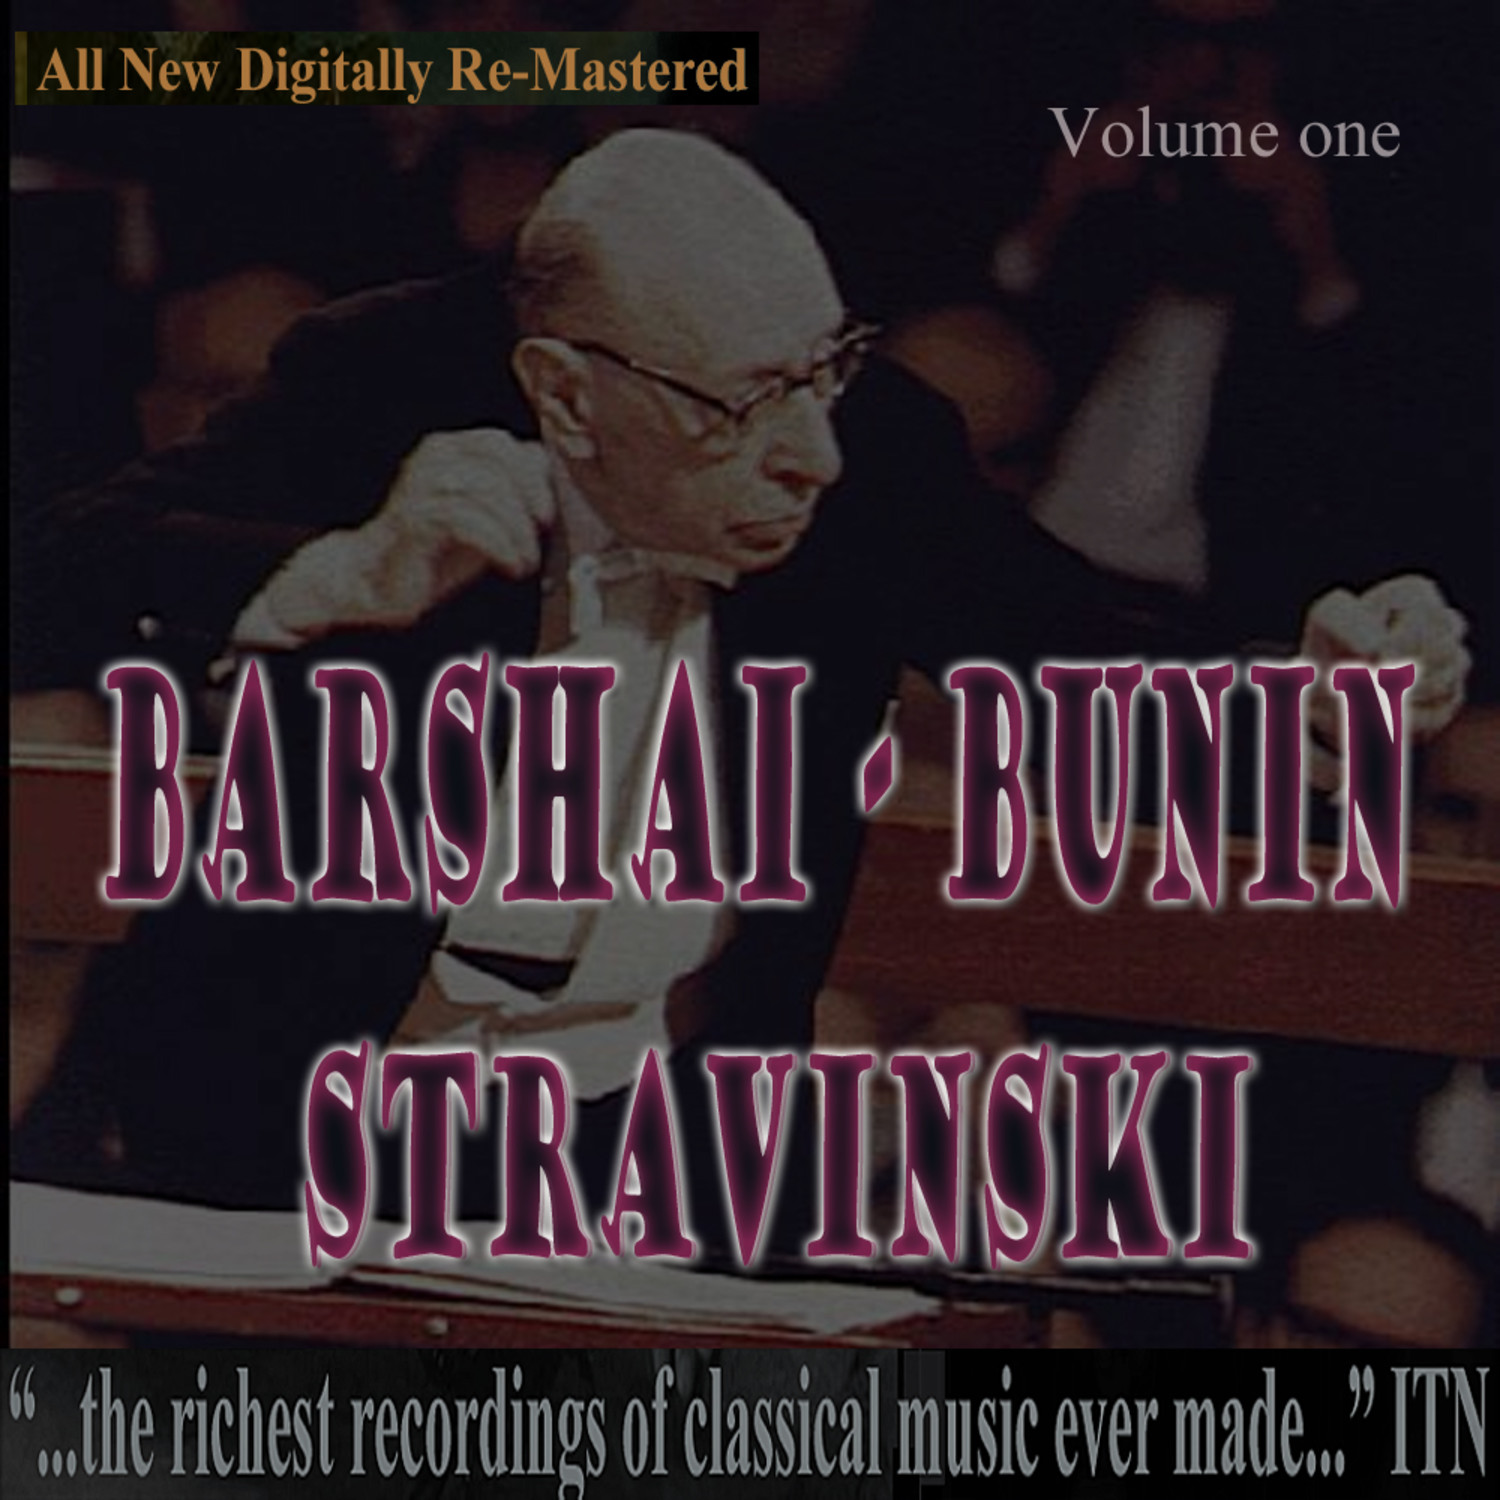 Barshai - Bunin, Stravinski Volume One